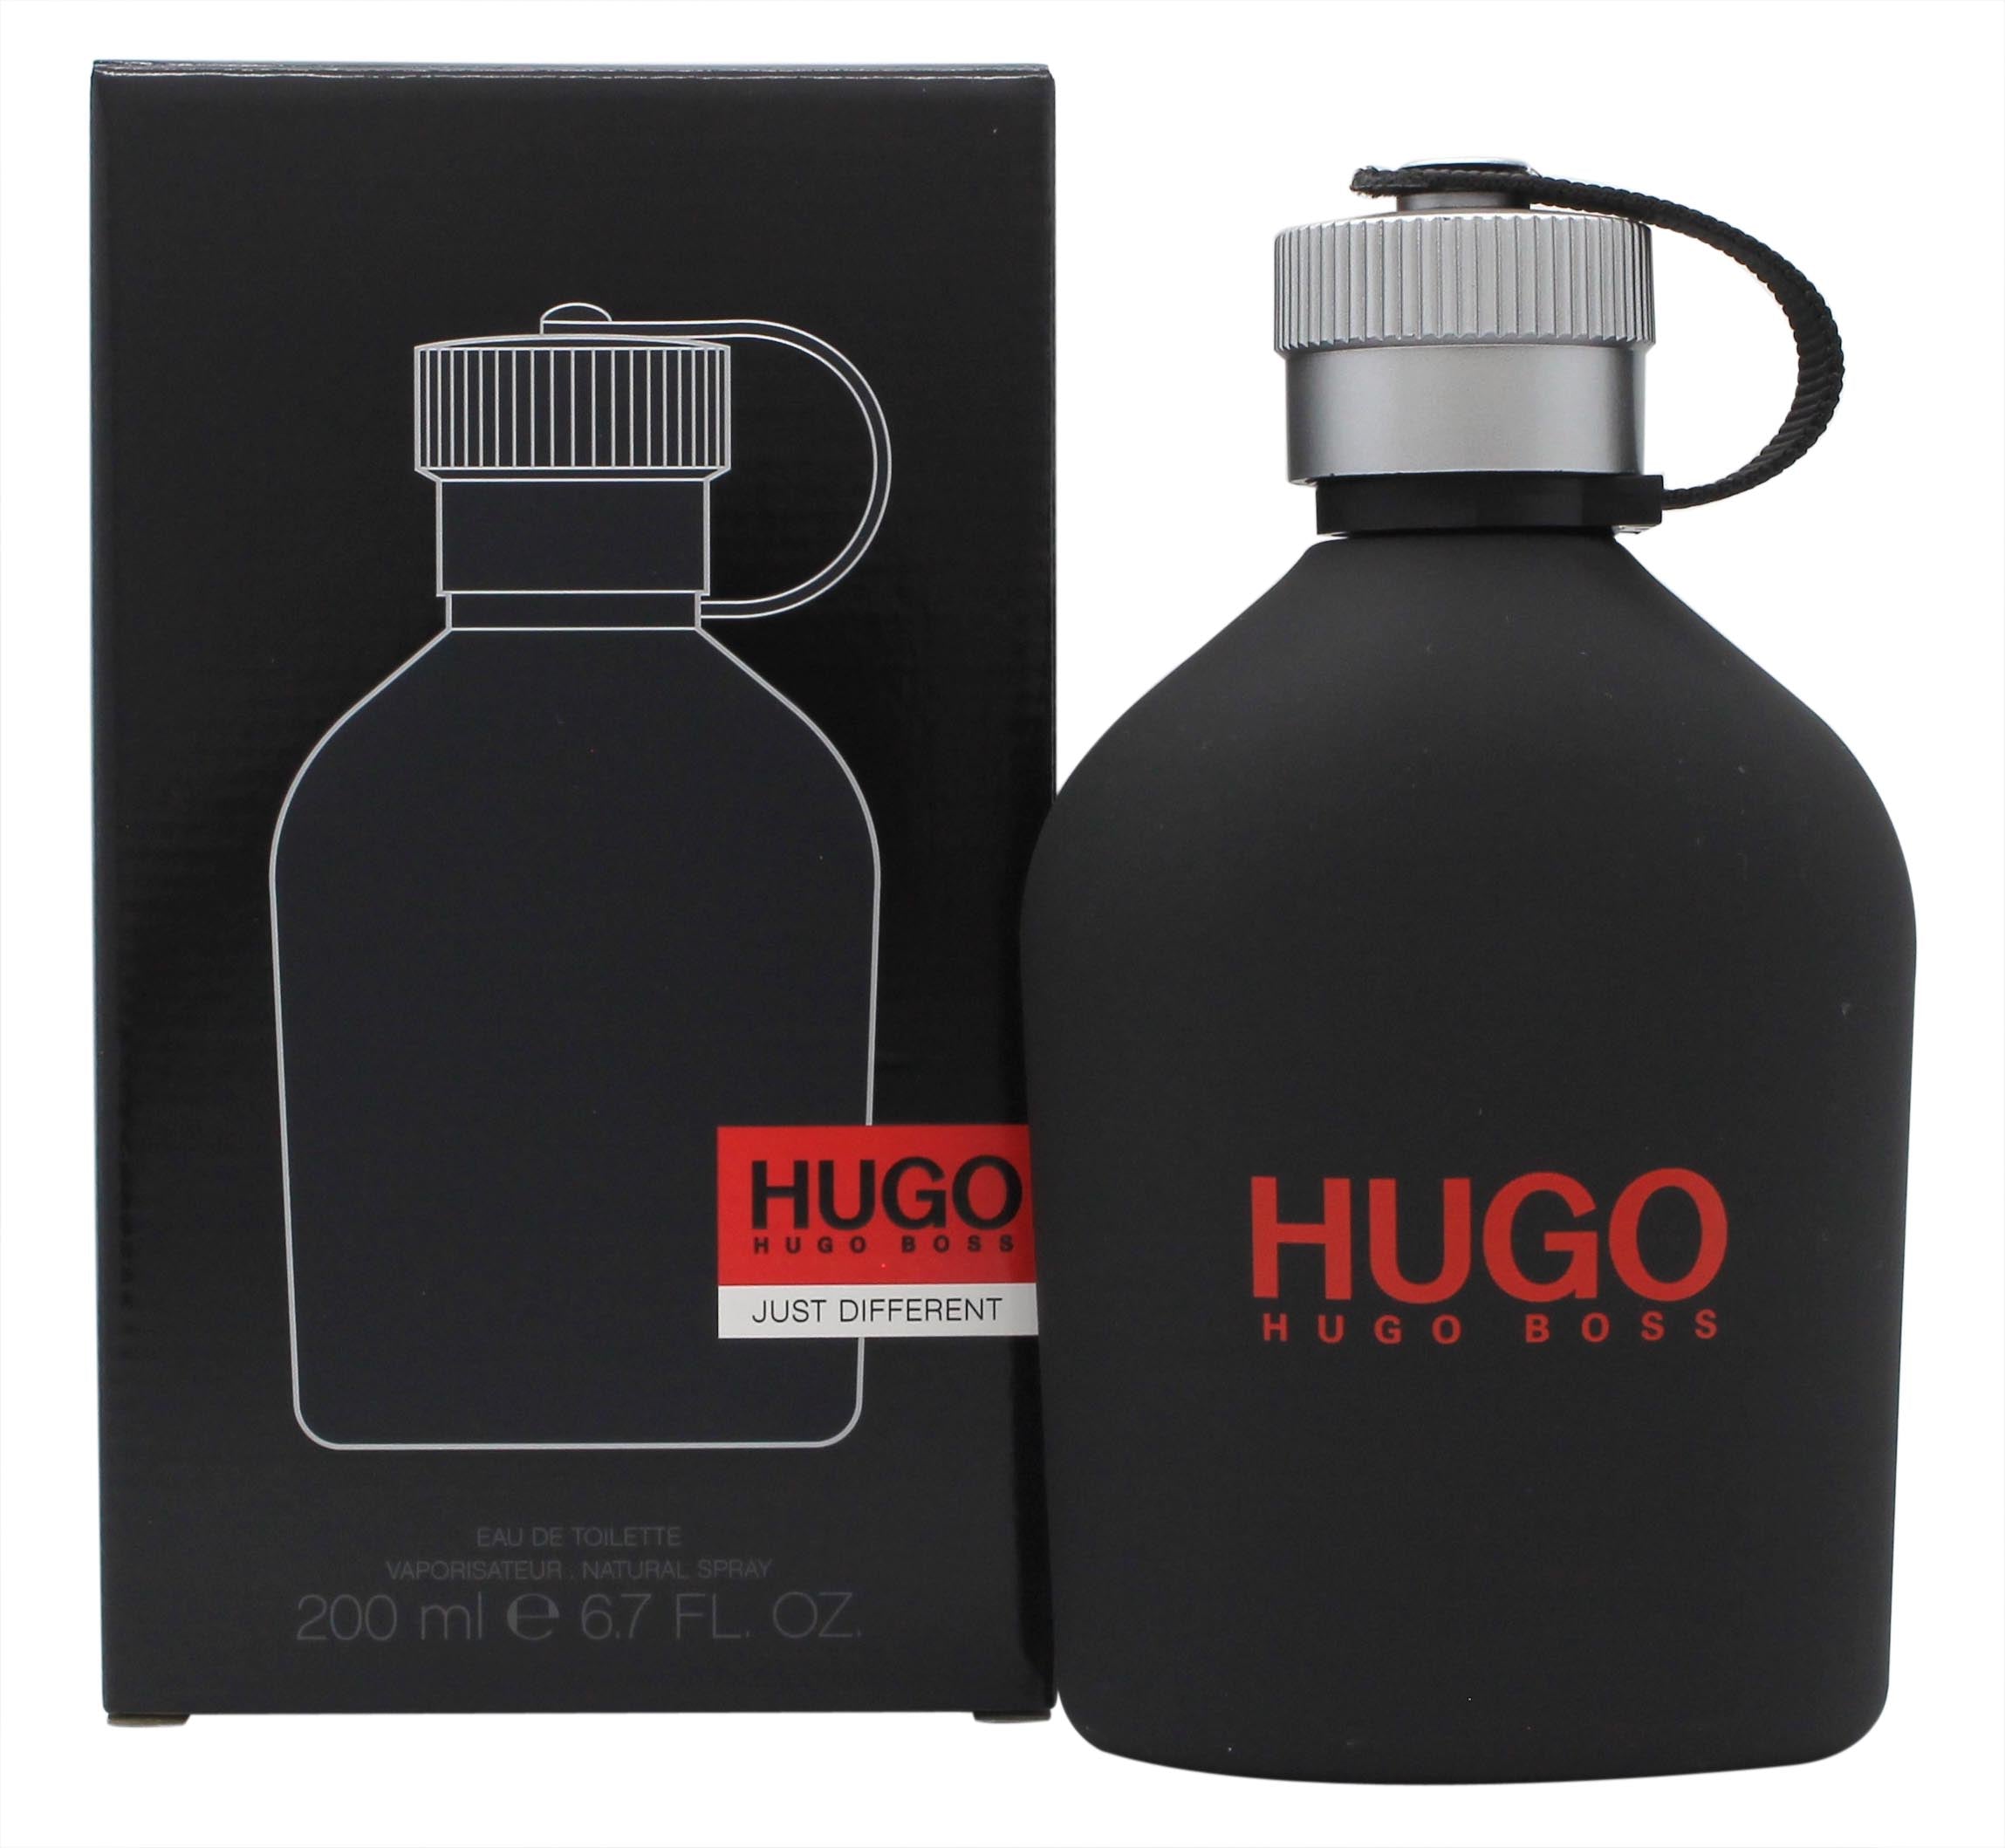 View Hugo Boss Just Different Eau de Toilette 200ml Spray information